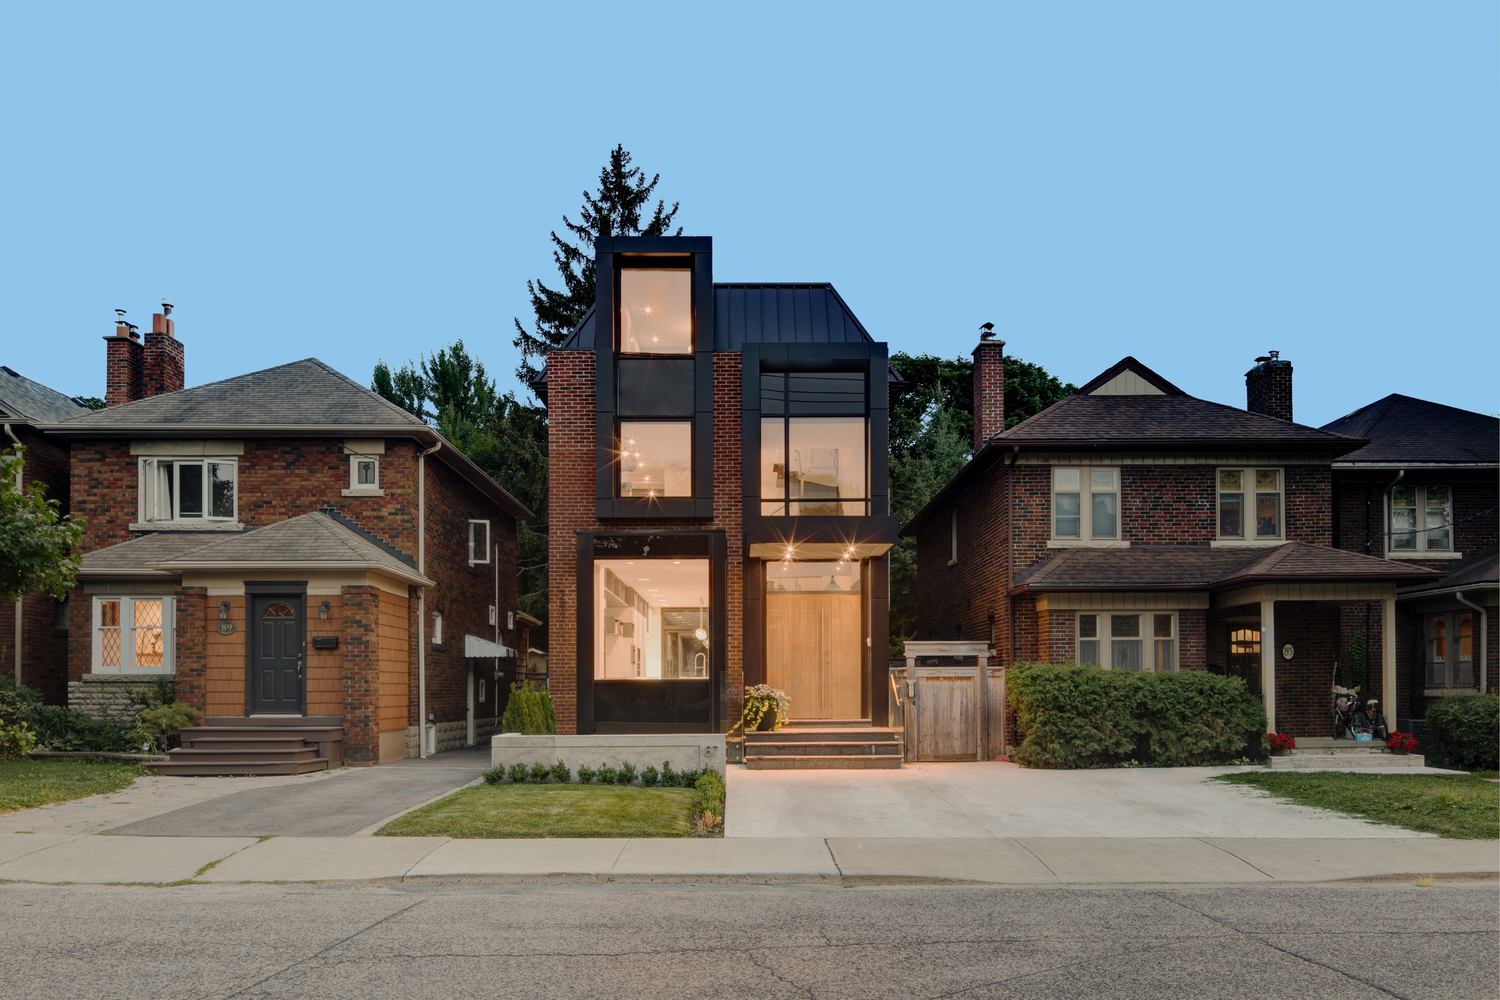 House Architecture Modern Neighborhood Street 1500x1000